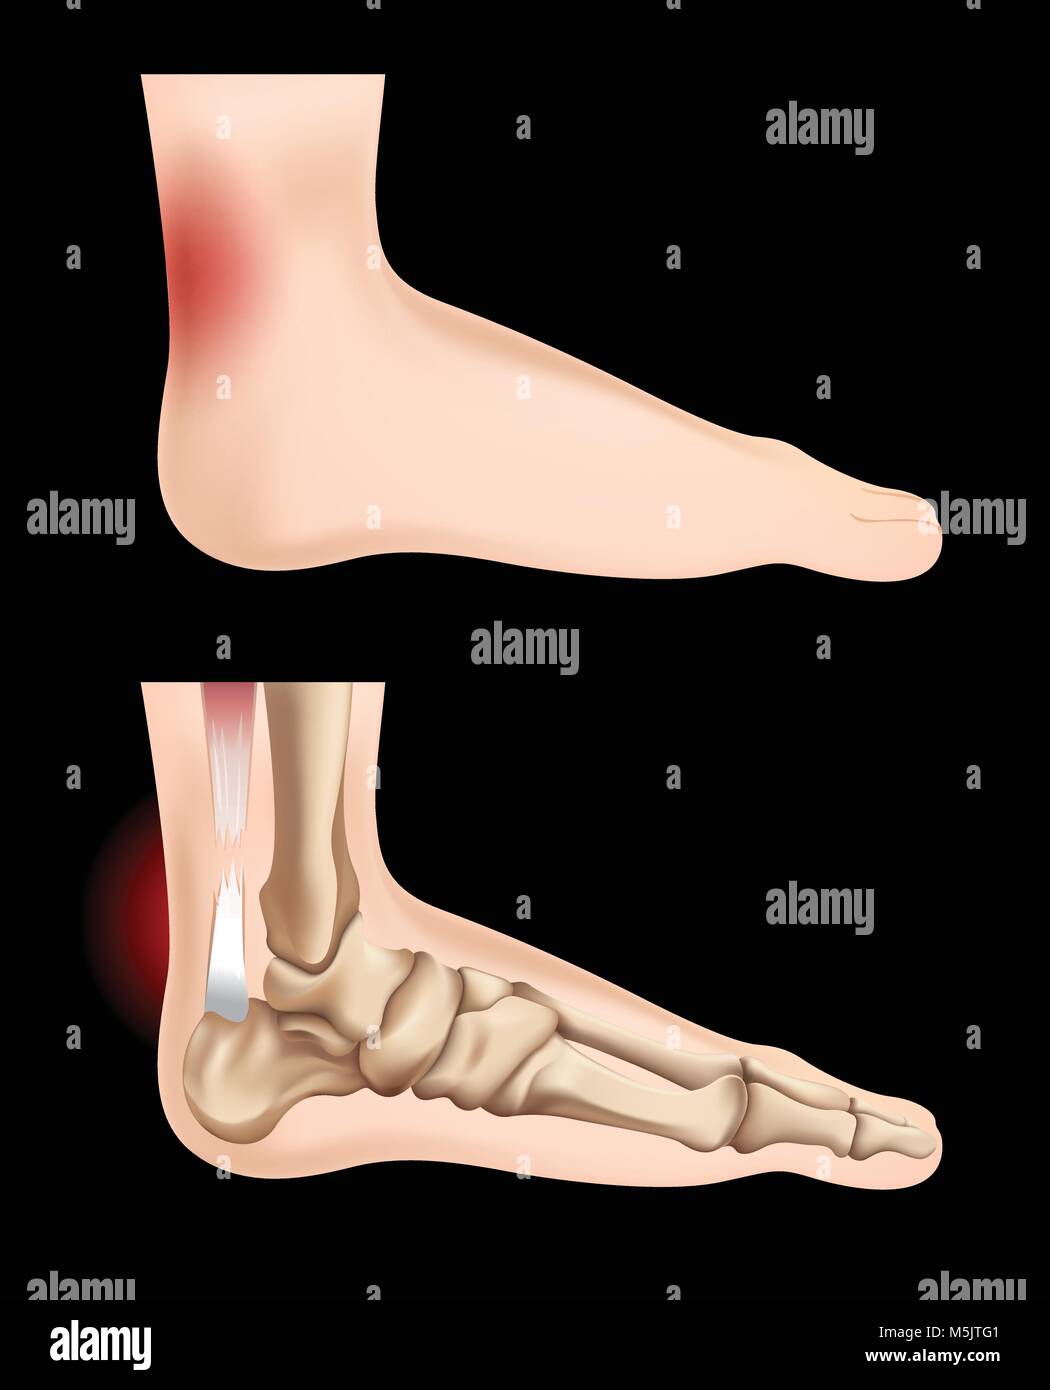 Diagram showing tendon injury illustration Stock Vector